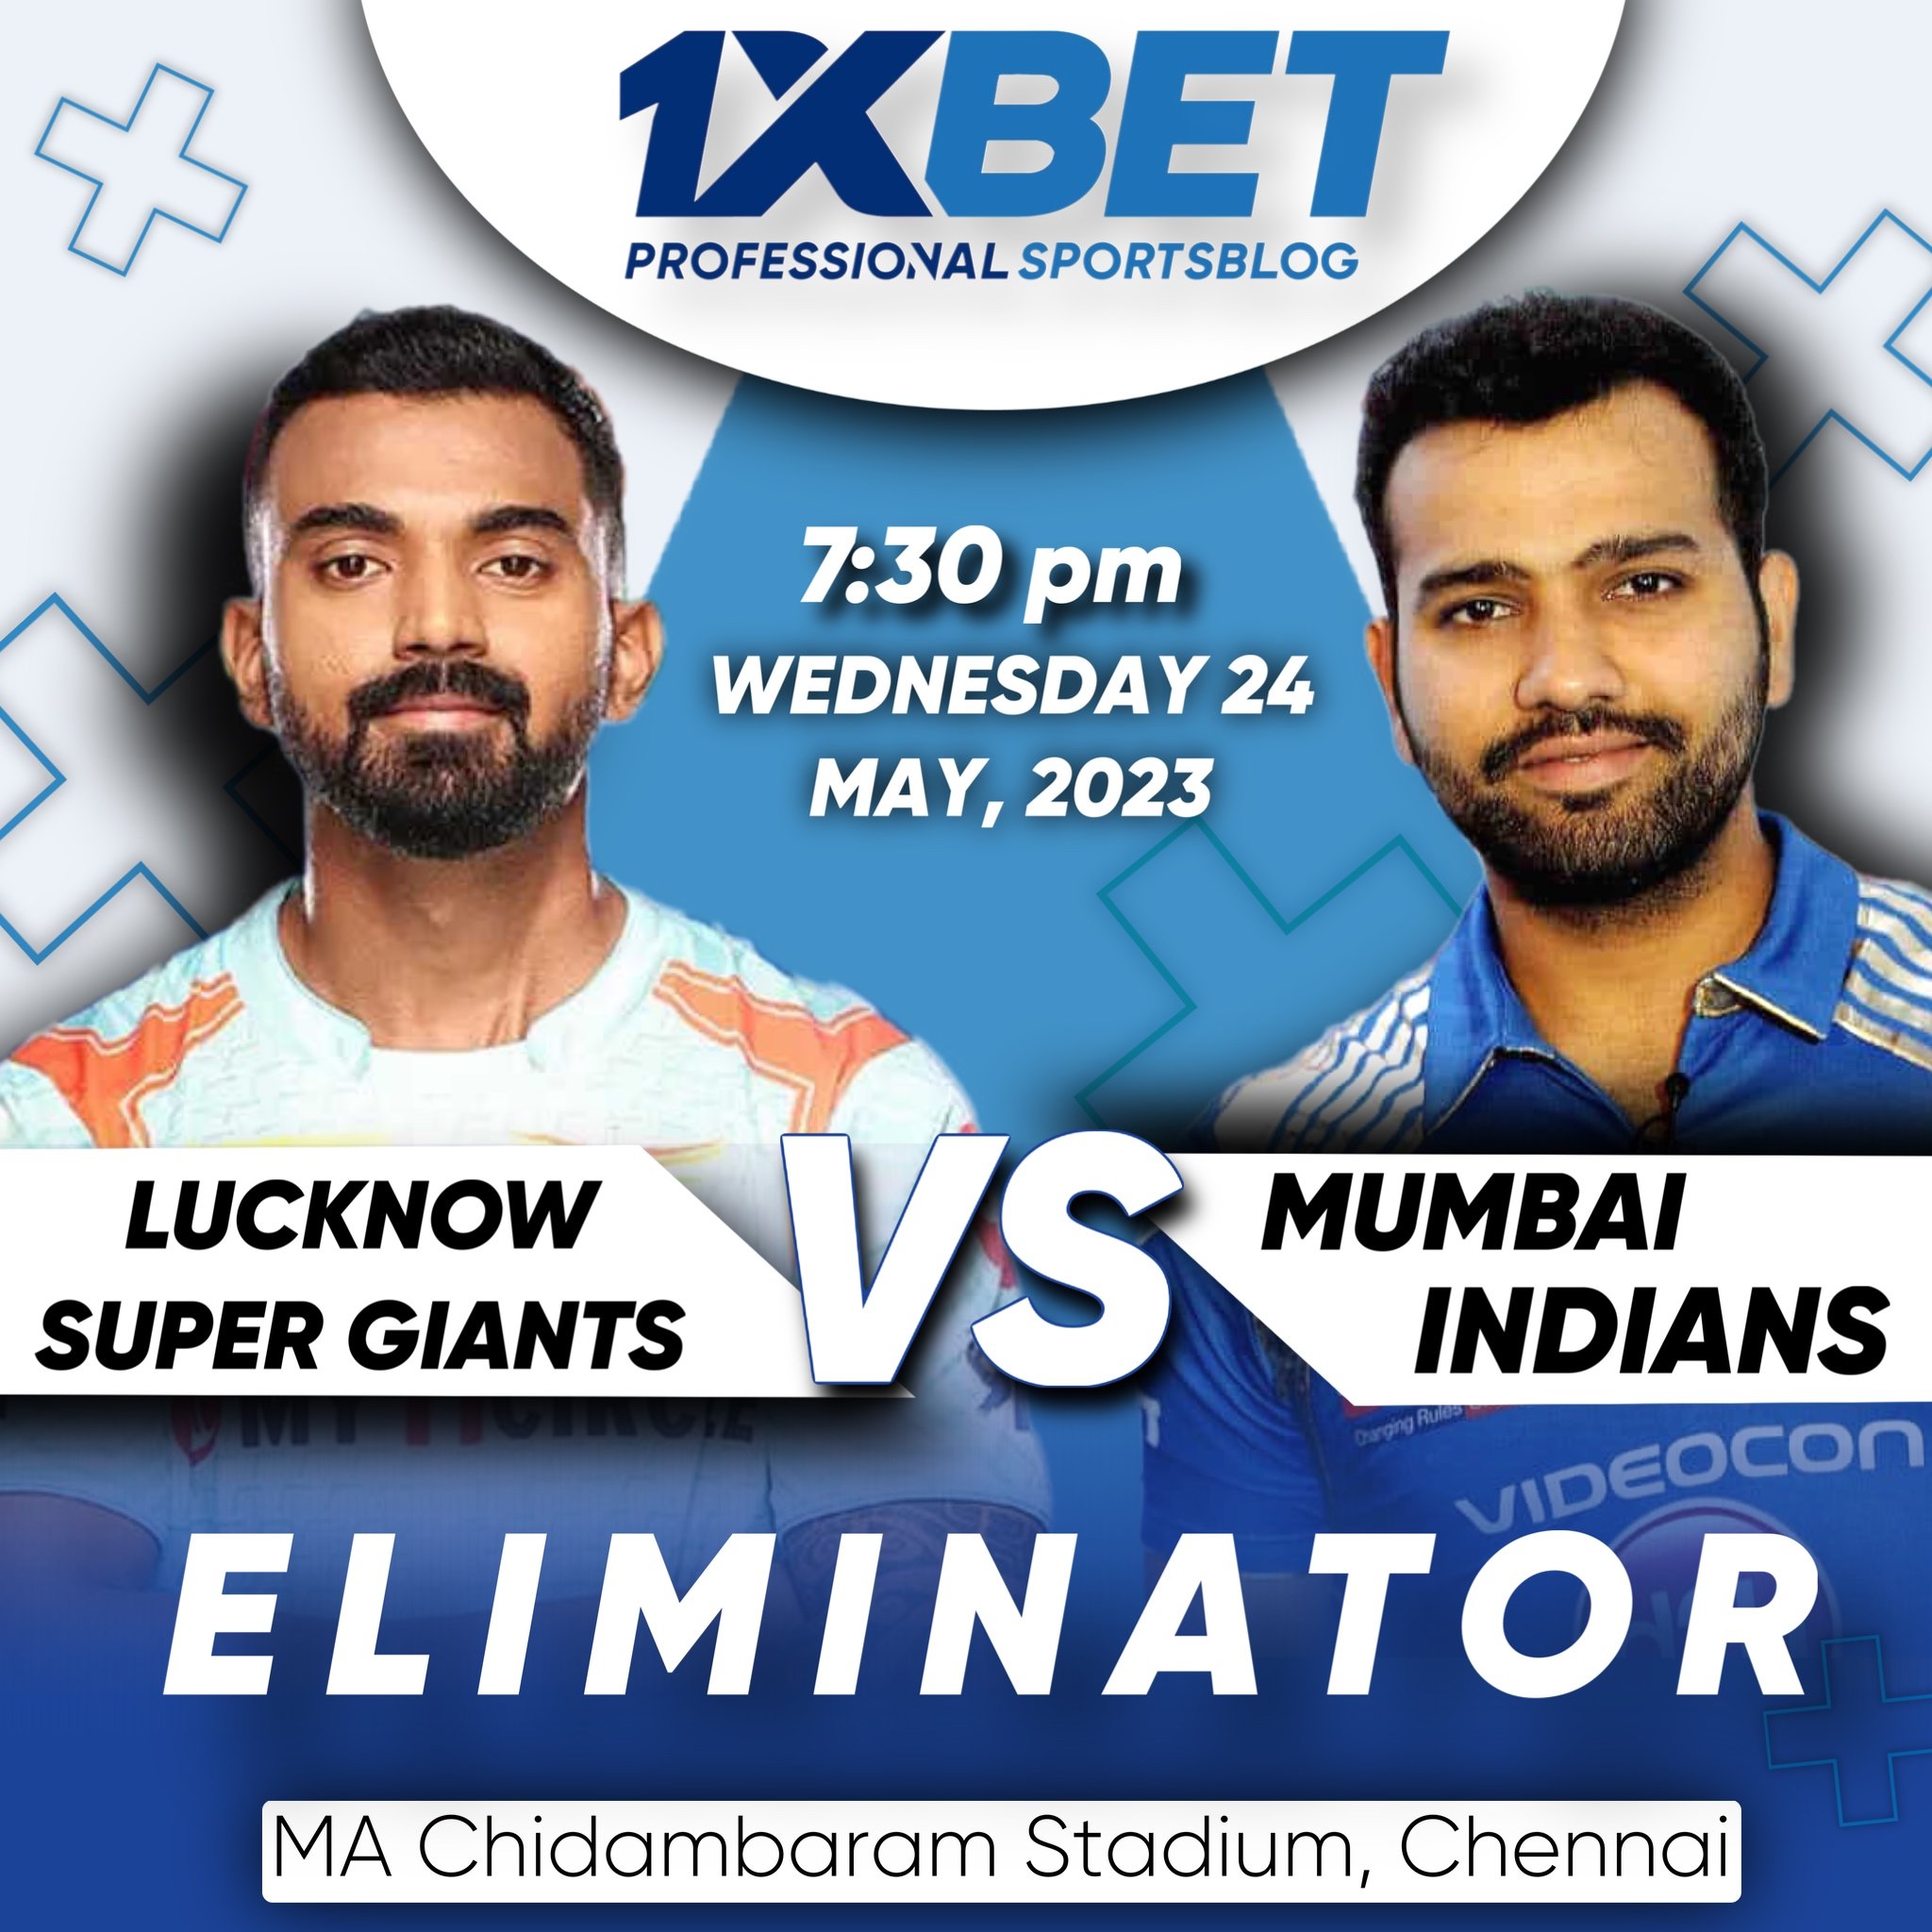 Mumbai Indians vs Lucknow Super Giants, IPL 2023, Eliminator Match Analysis